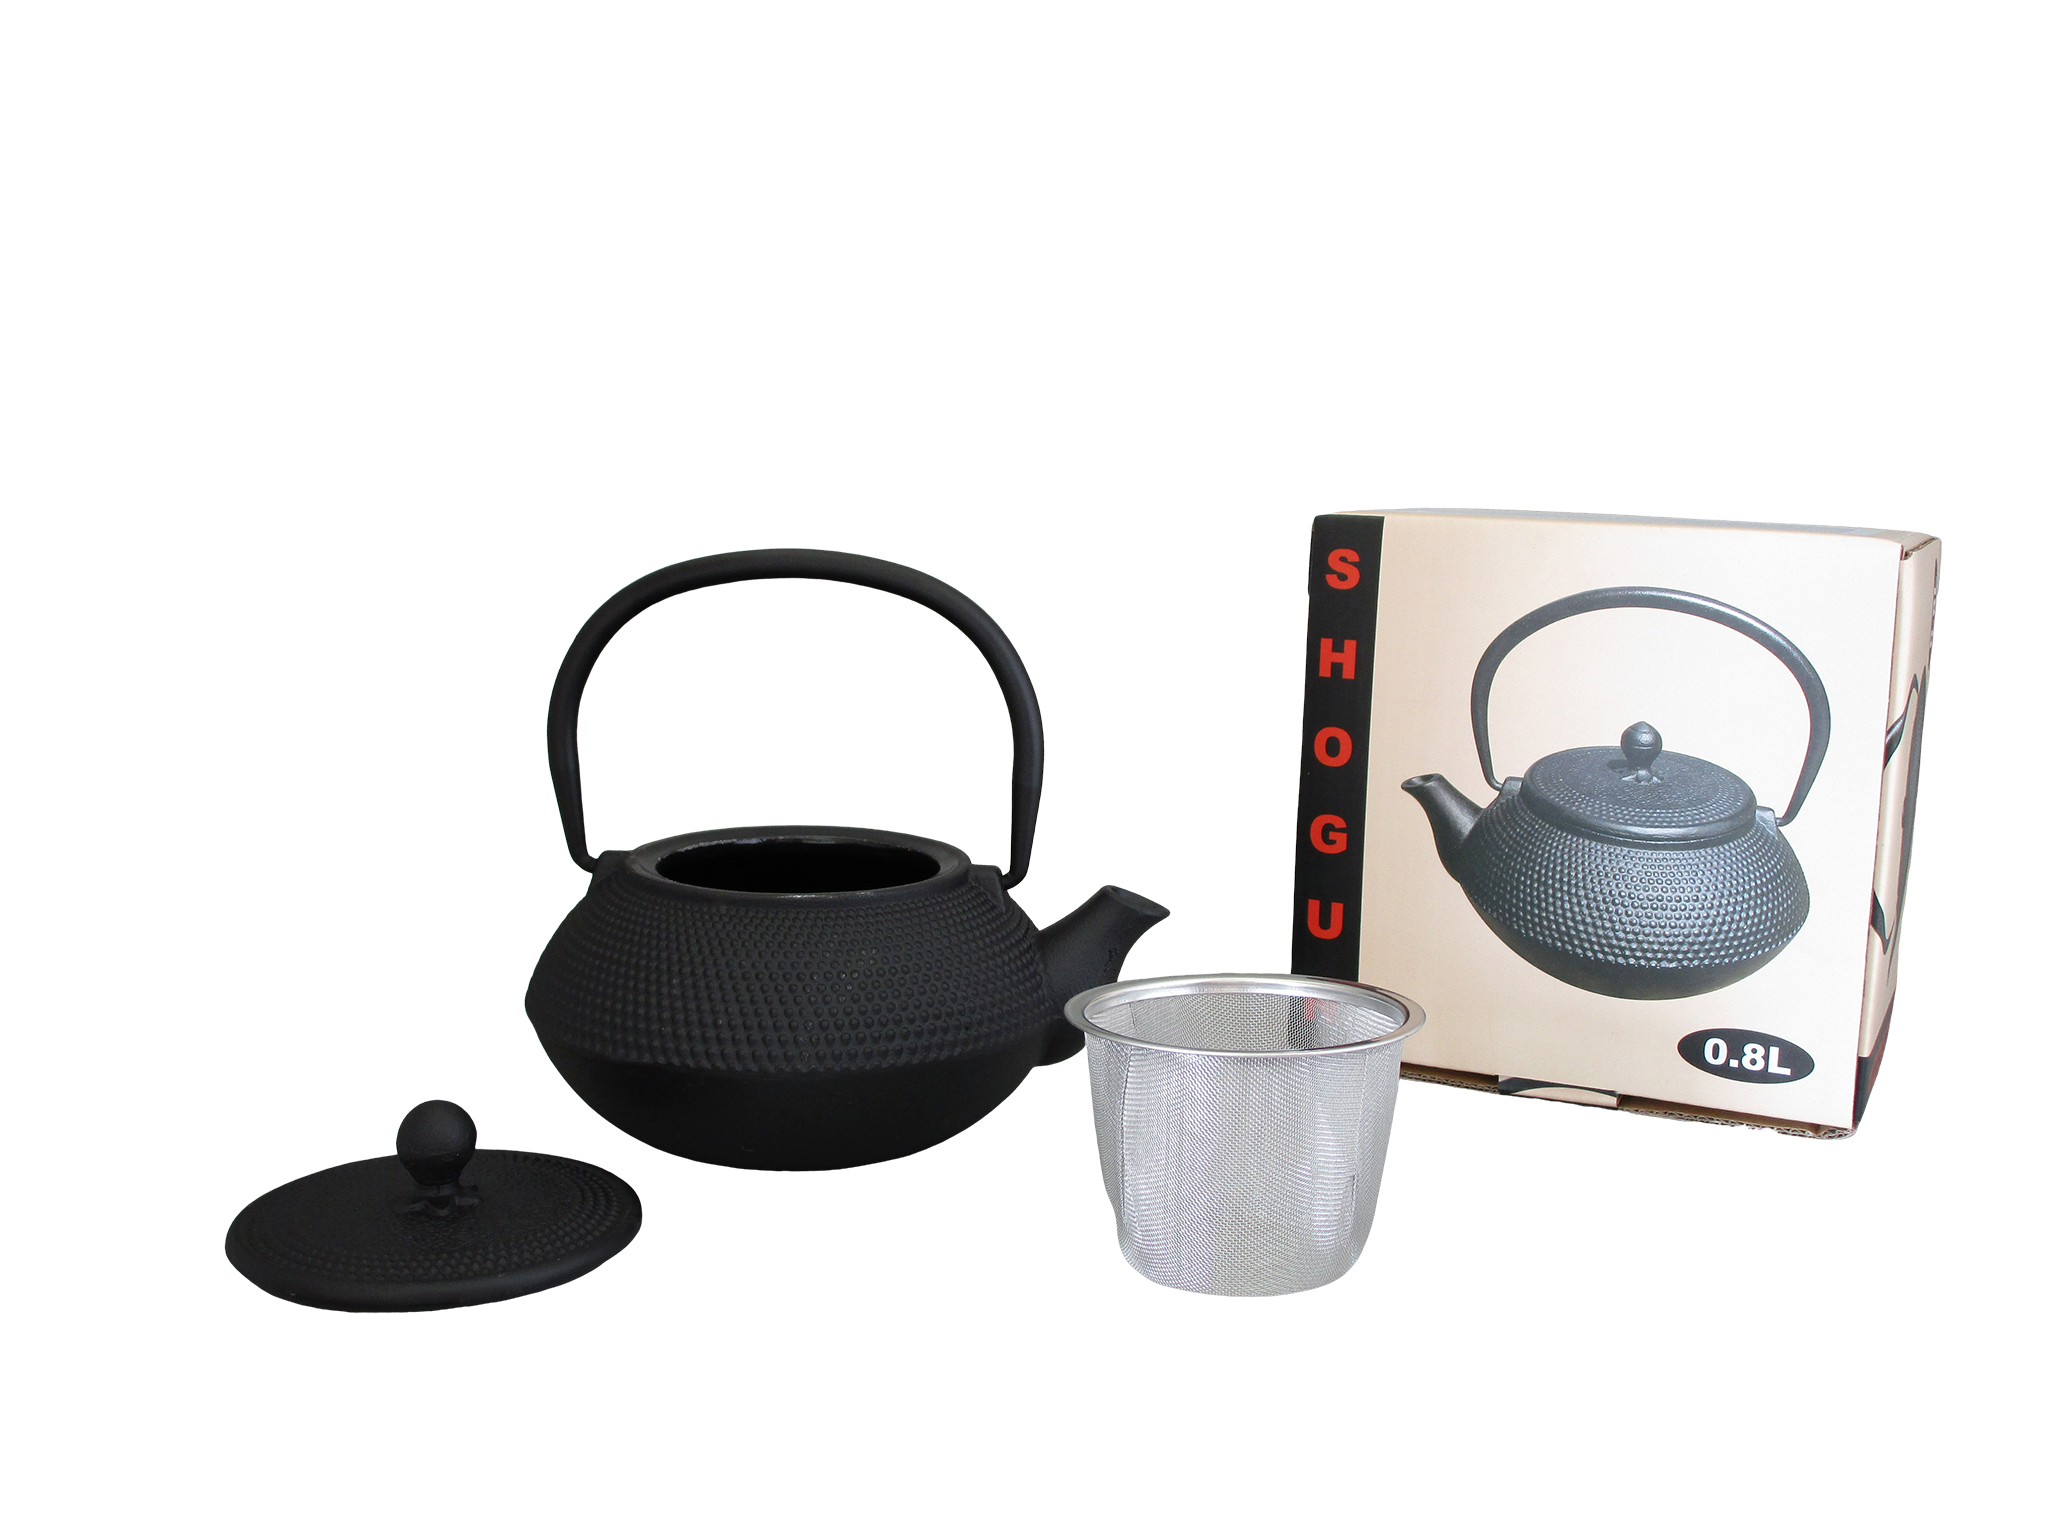 SHOGUN060 - Cast iron teapot enameled interior 0.60 L - Green Leaf